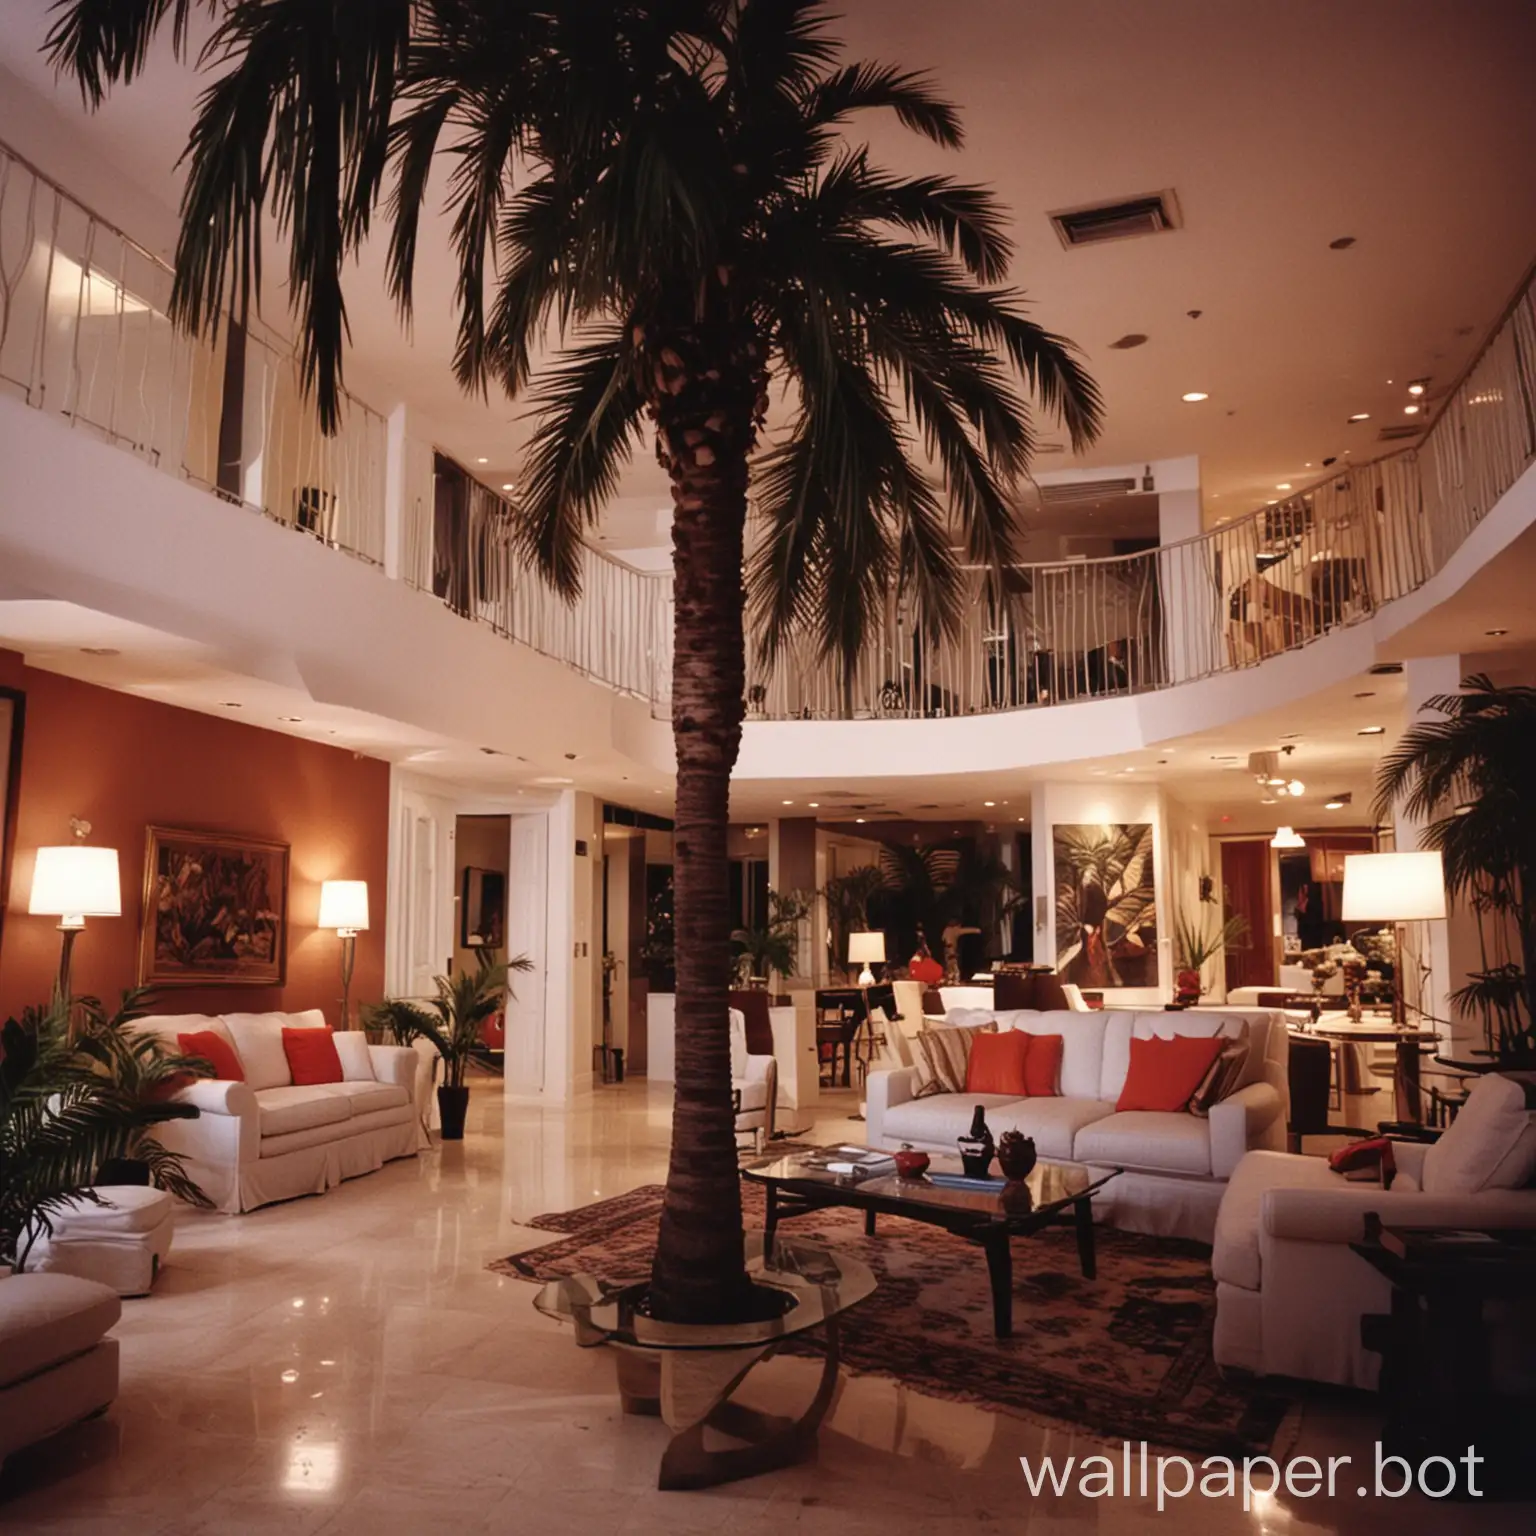 1980s interior house luxurious condominium dark palm tree miami